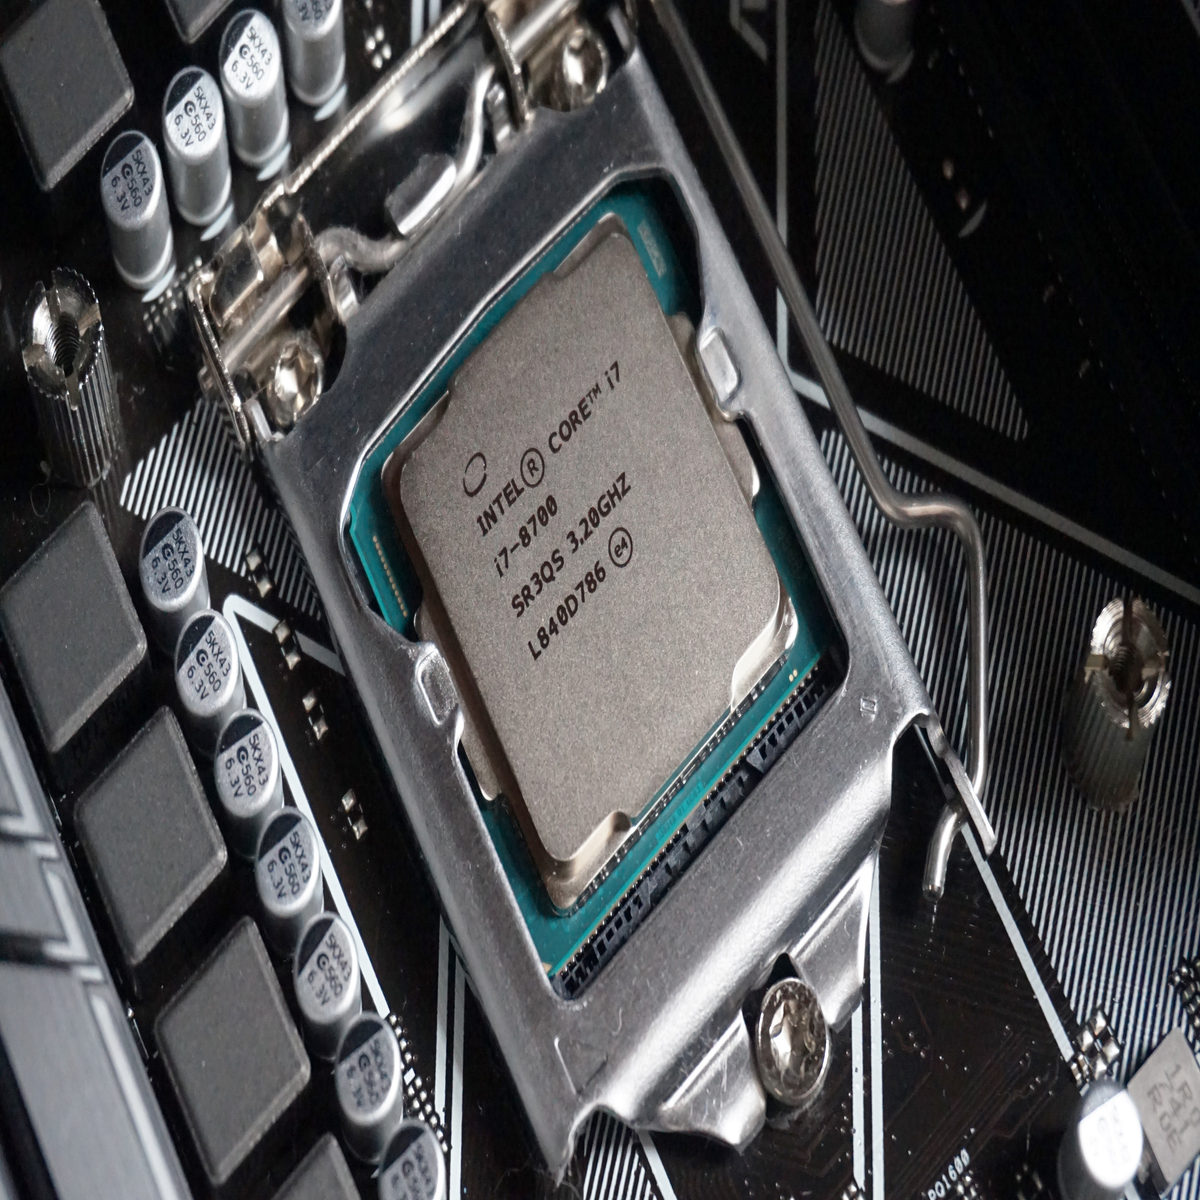 Intel Core i7-8700 review